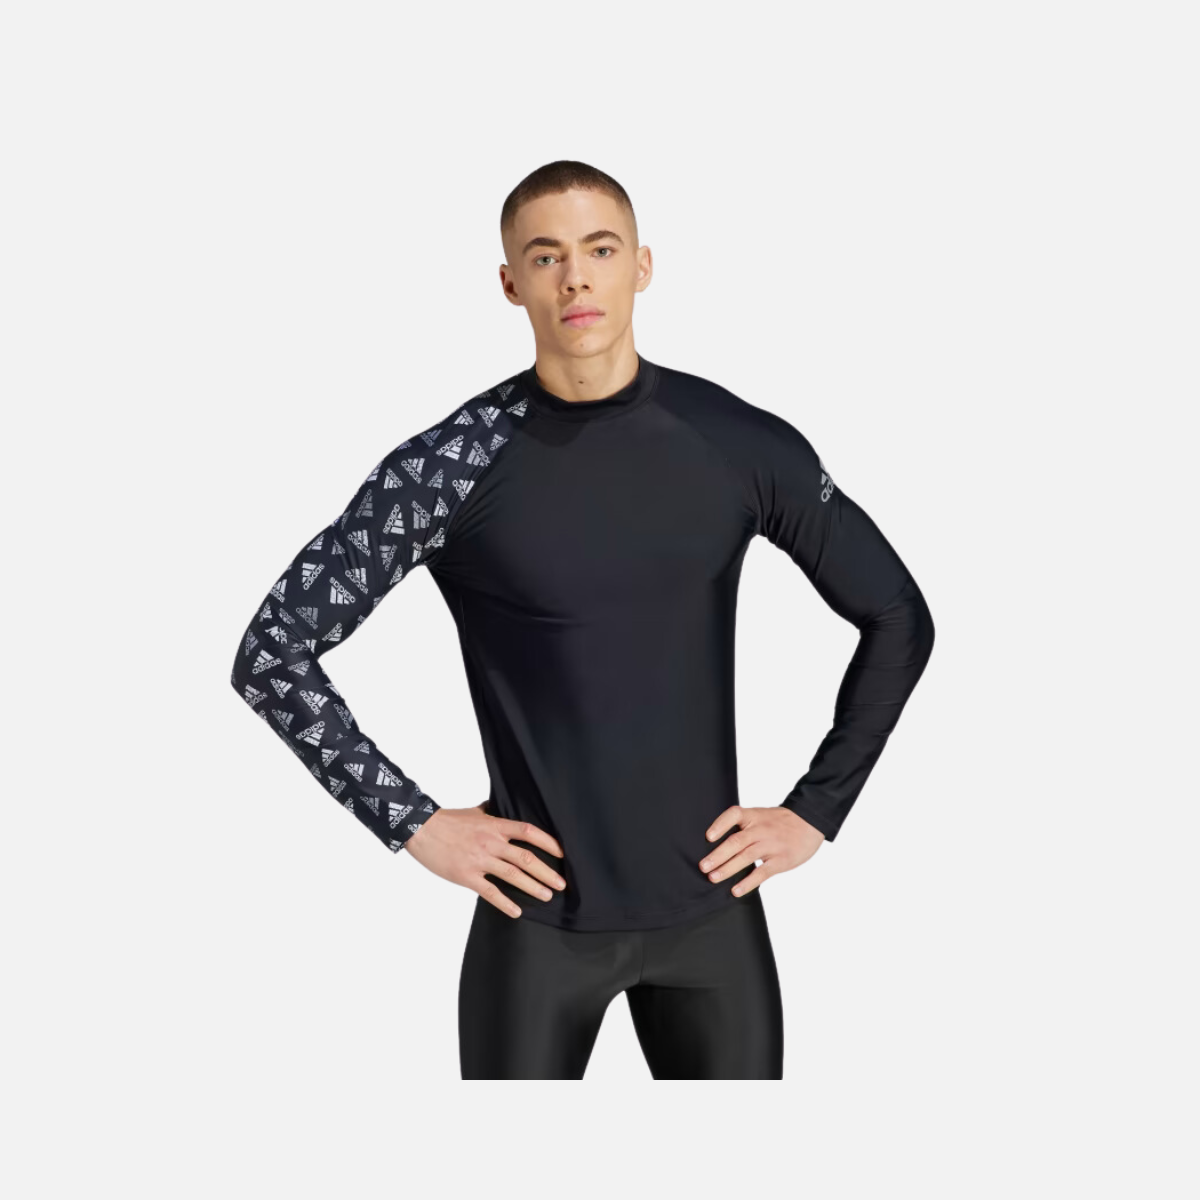 Adidas Long Sleeve Men's Swim Rash Guard -Black